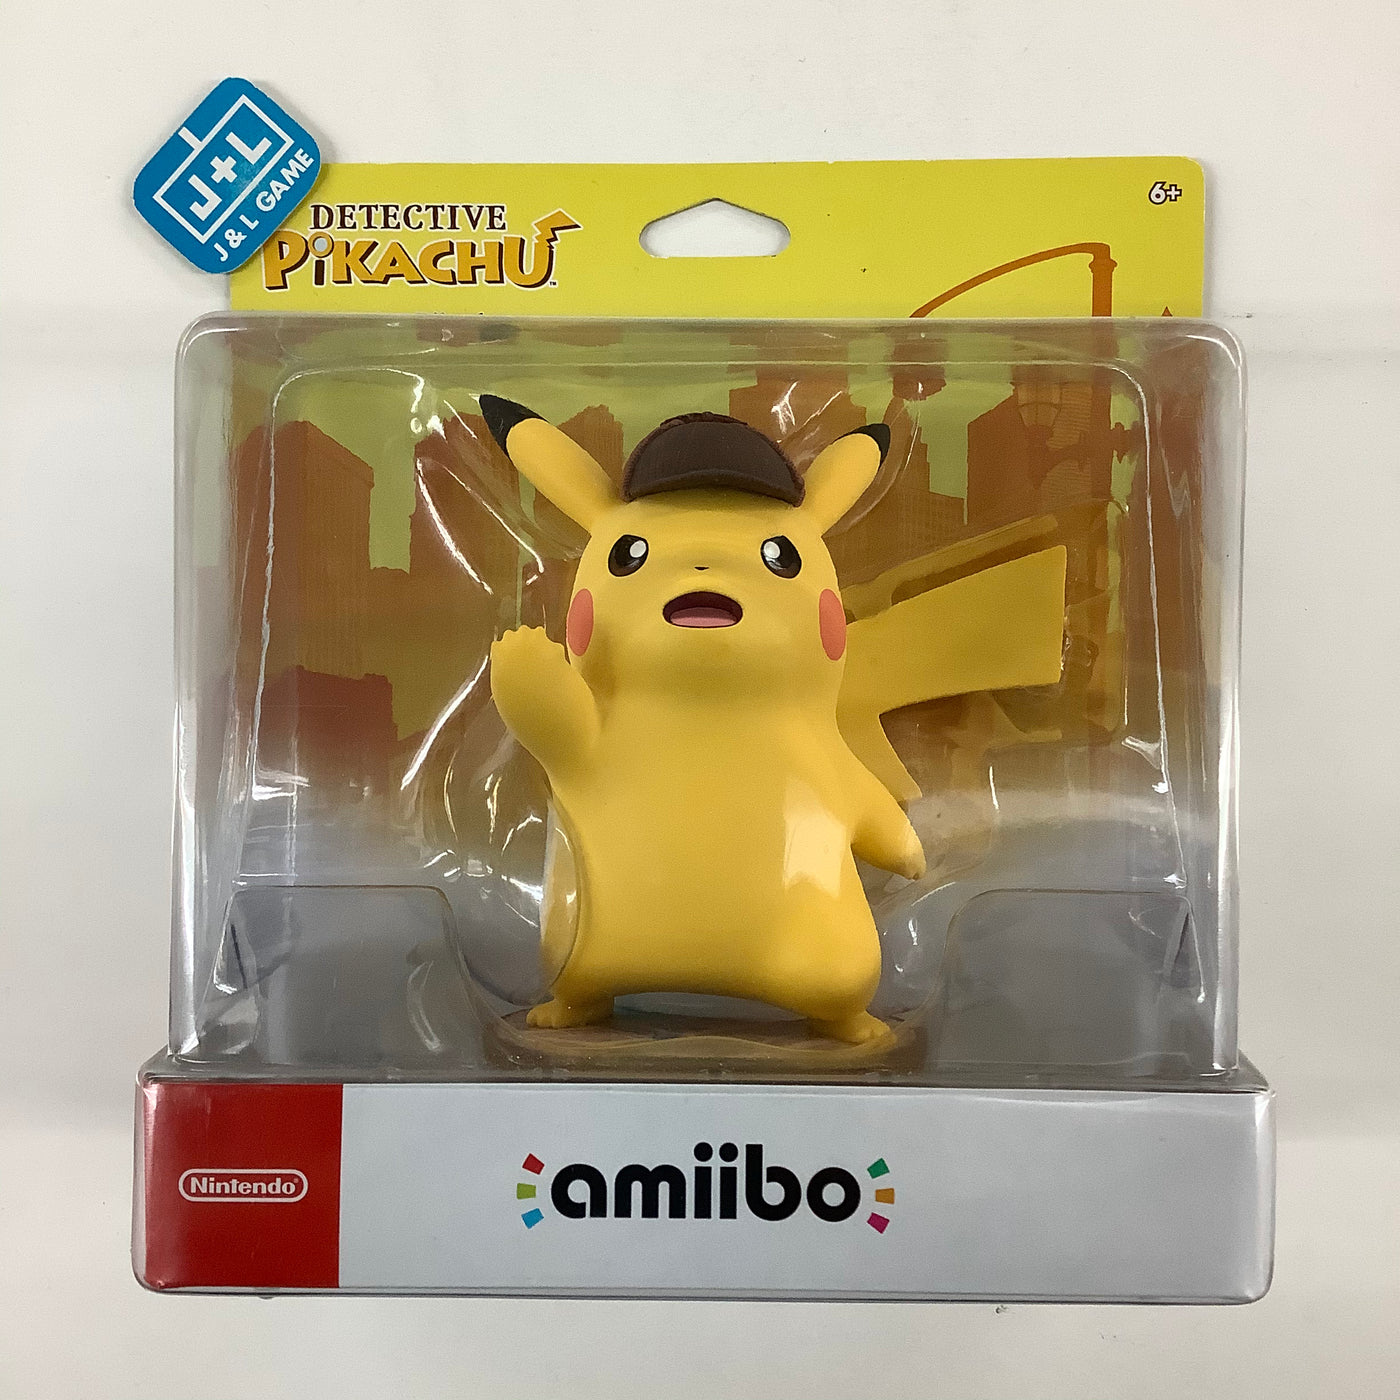 Detective Pikachu (Pokémon series) - Nintendo 3DS Amiibo